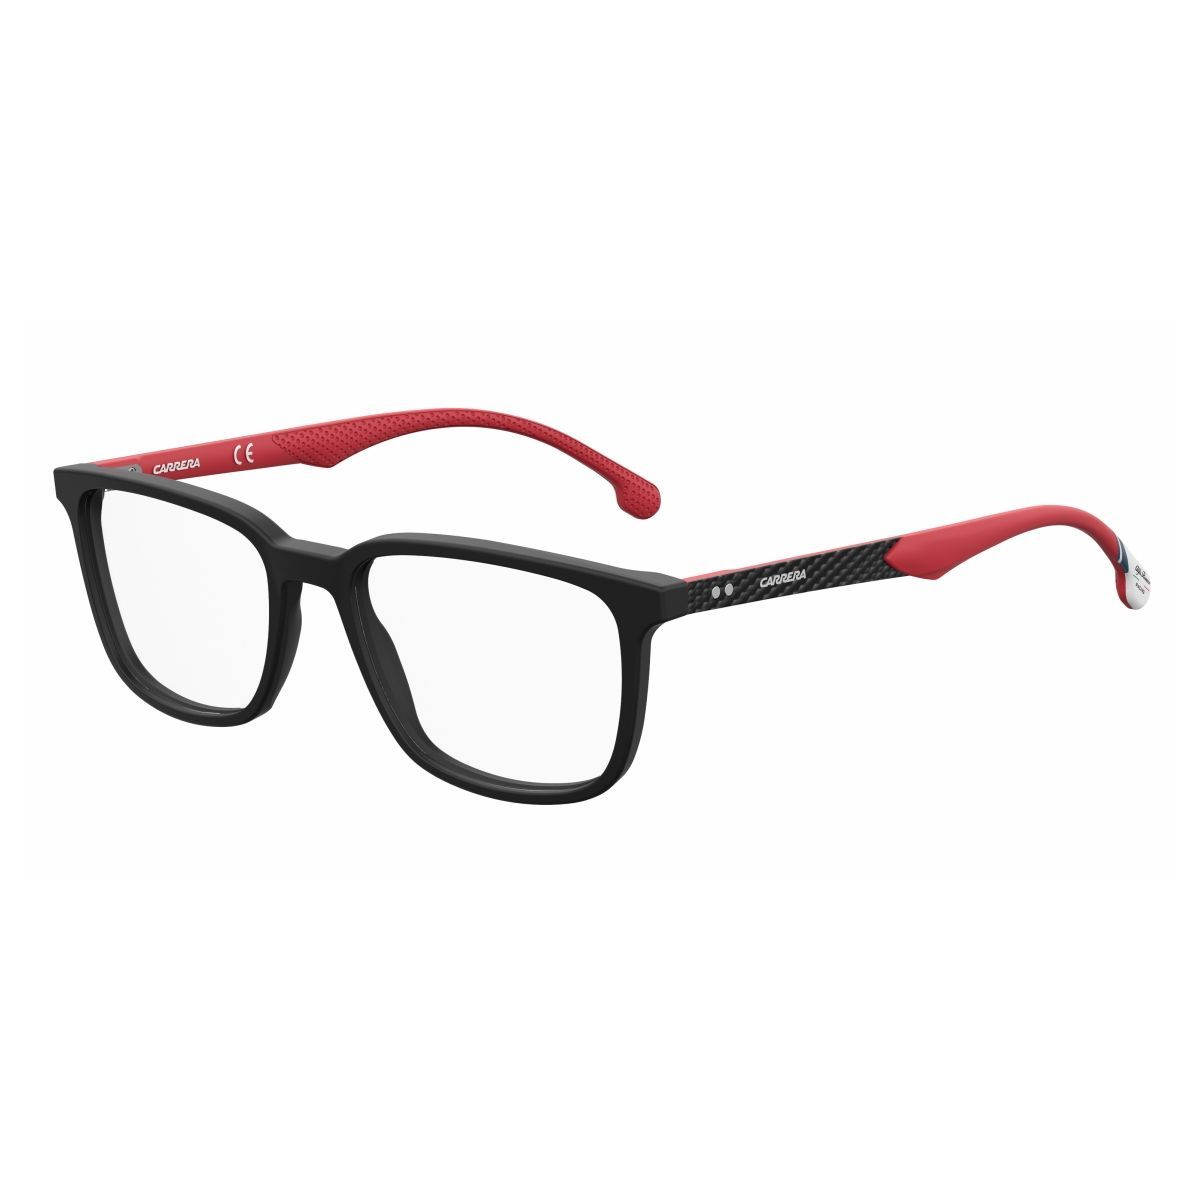 Carrera | AvramisOptics Contact Lenses, Sunglasses and Eyeglasses